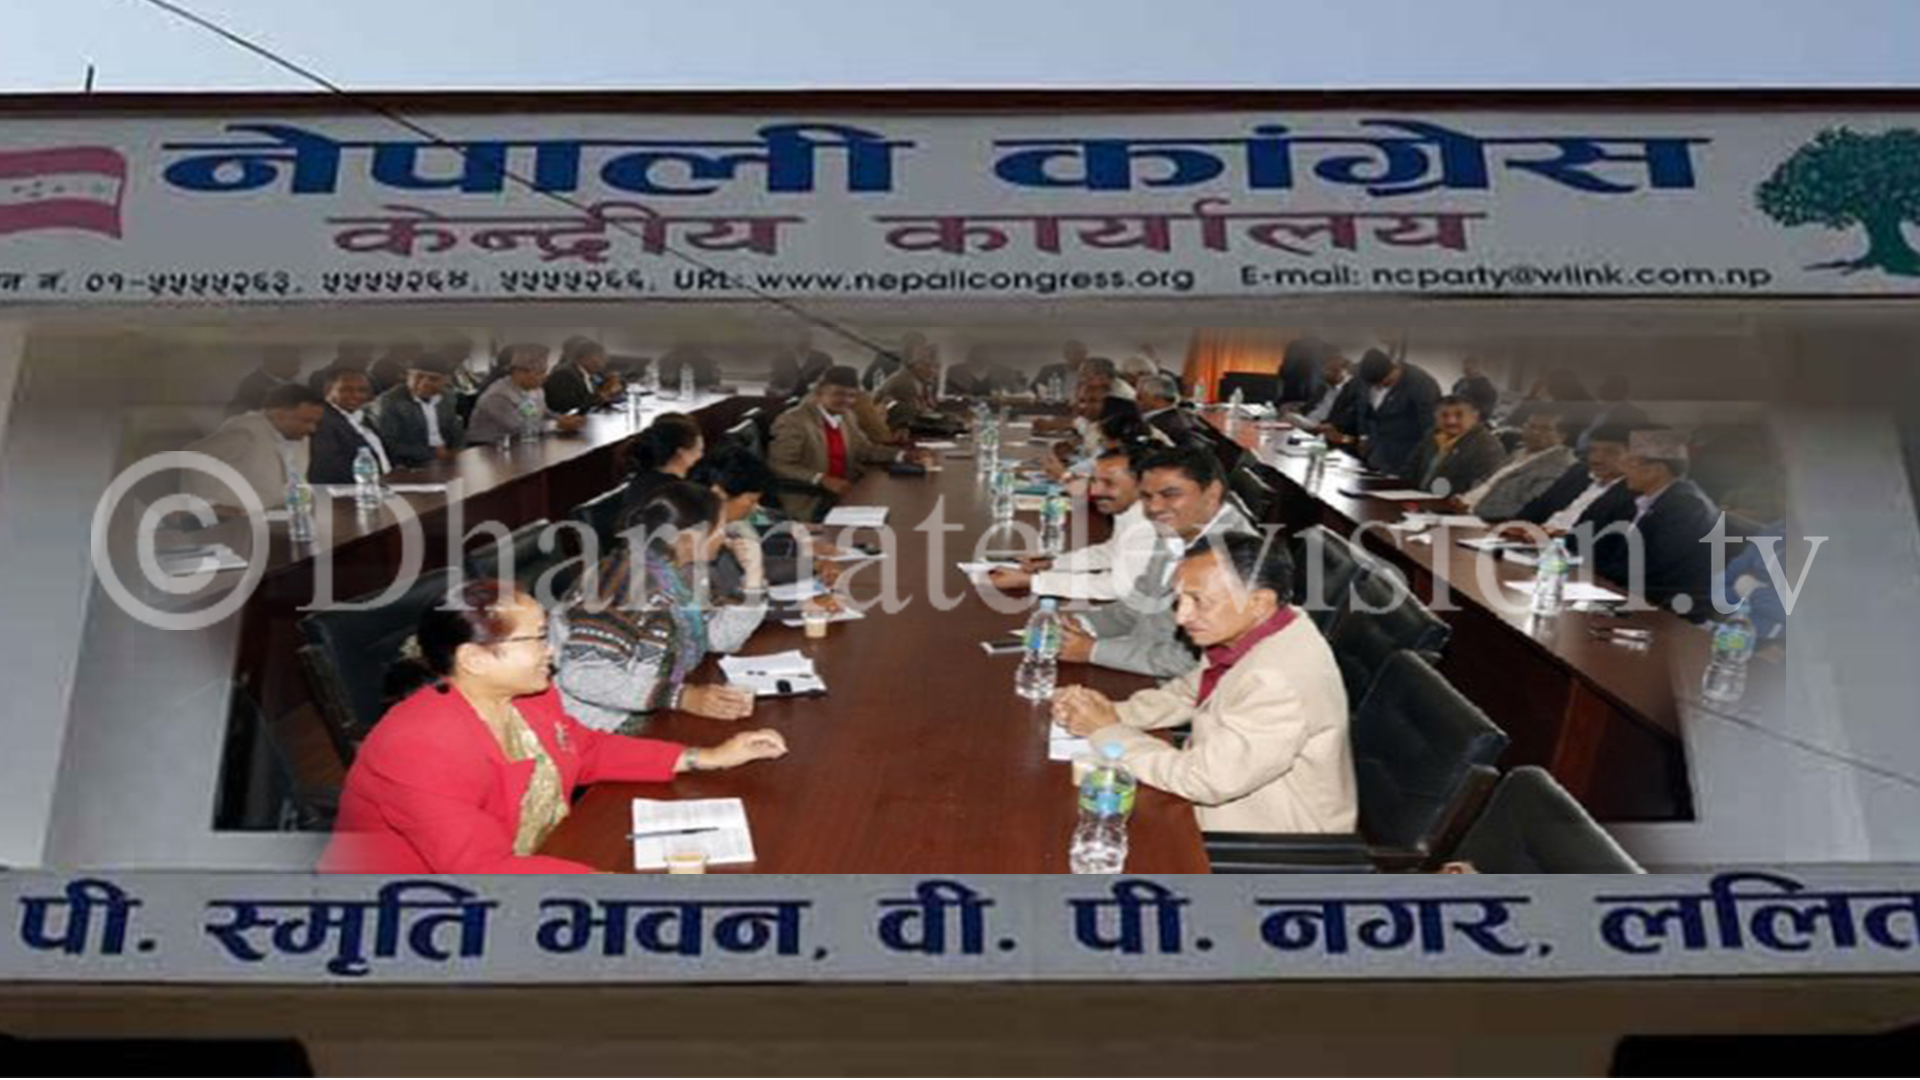 Nepali Congress meeting to be held on November 6